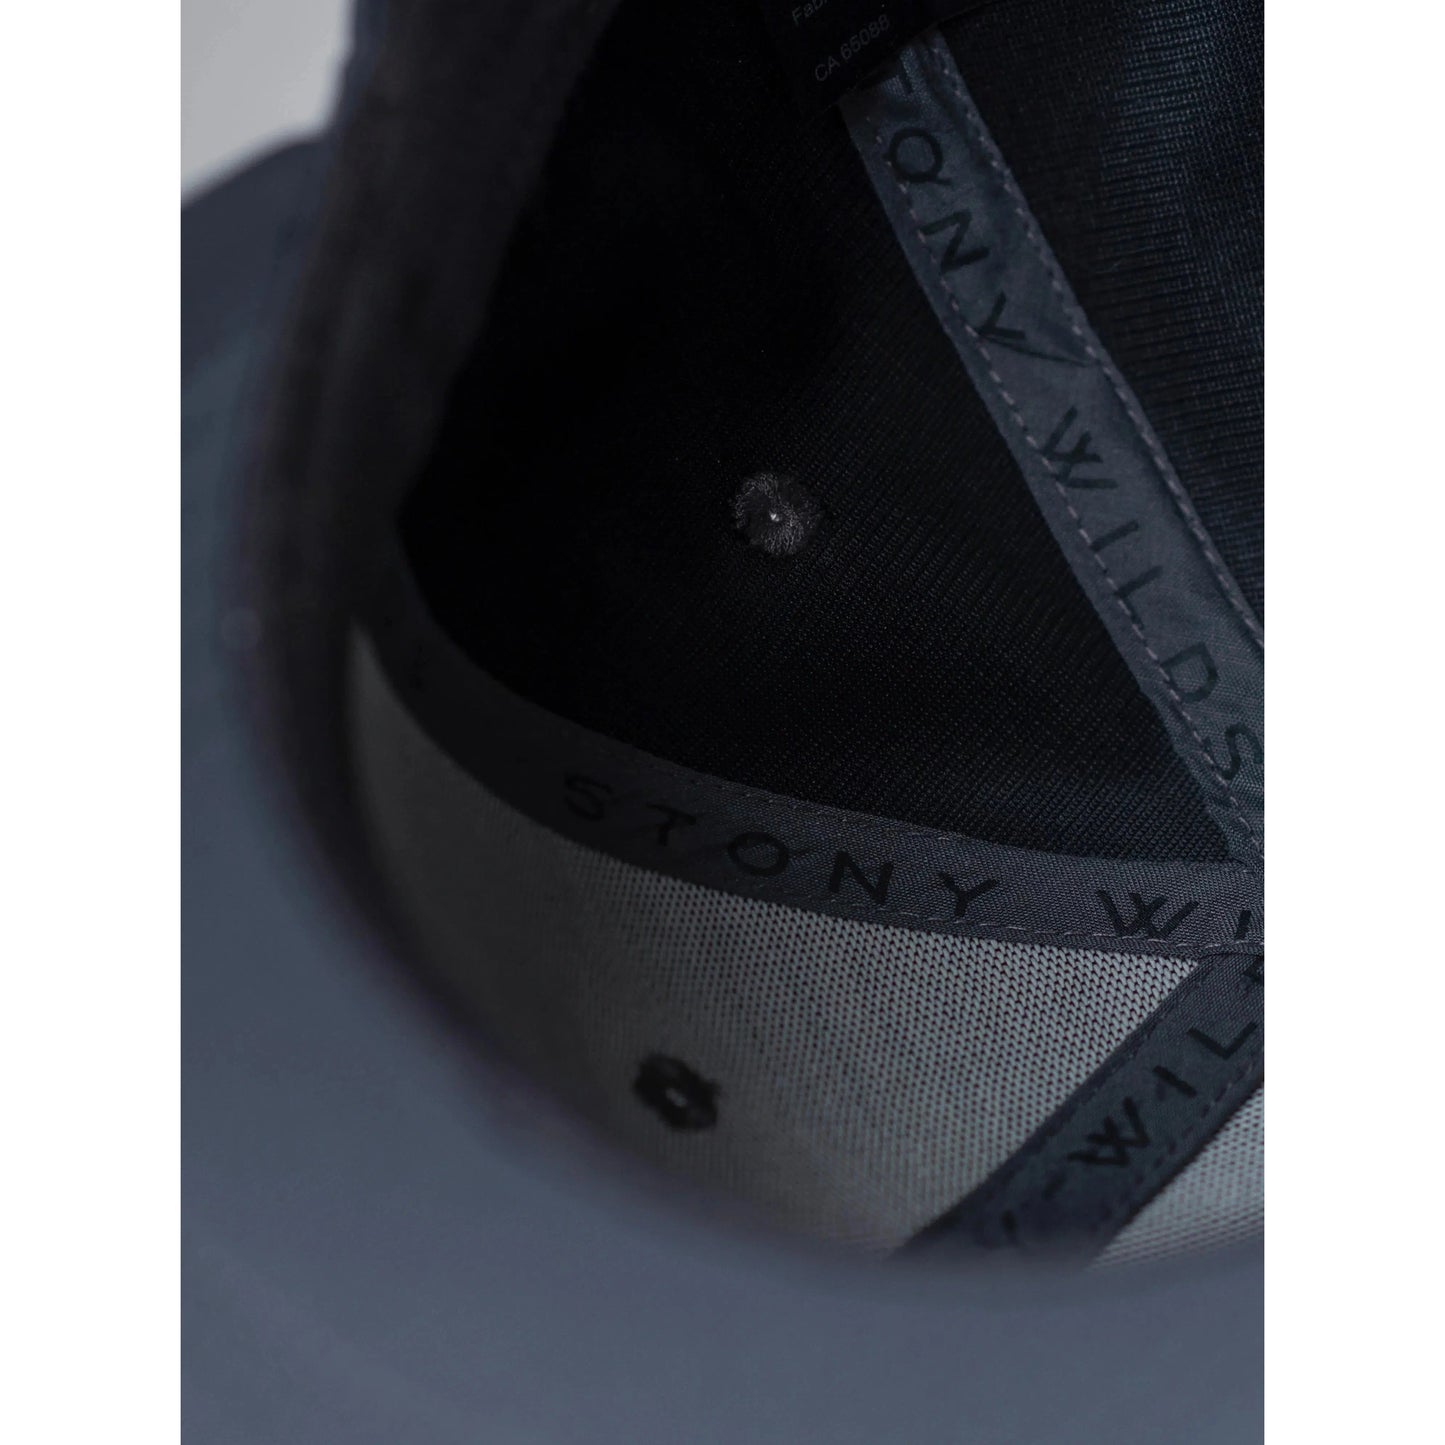 URSUS SNAPBACK - GRANITE-S24USGR-O/SGRNT-MENS HATS-STONY WILDS-JB Evans Fashions & Footwear